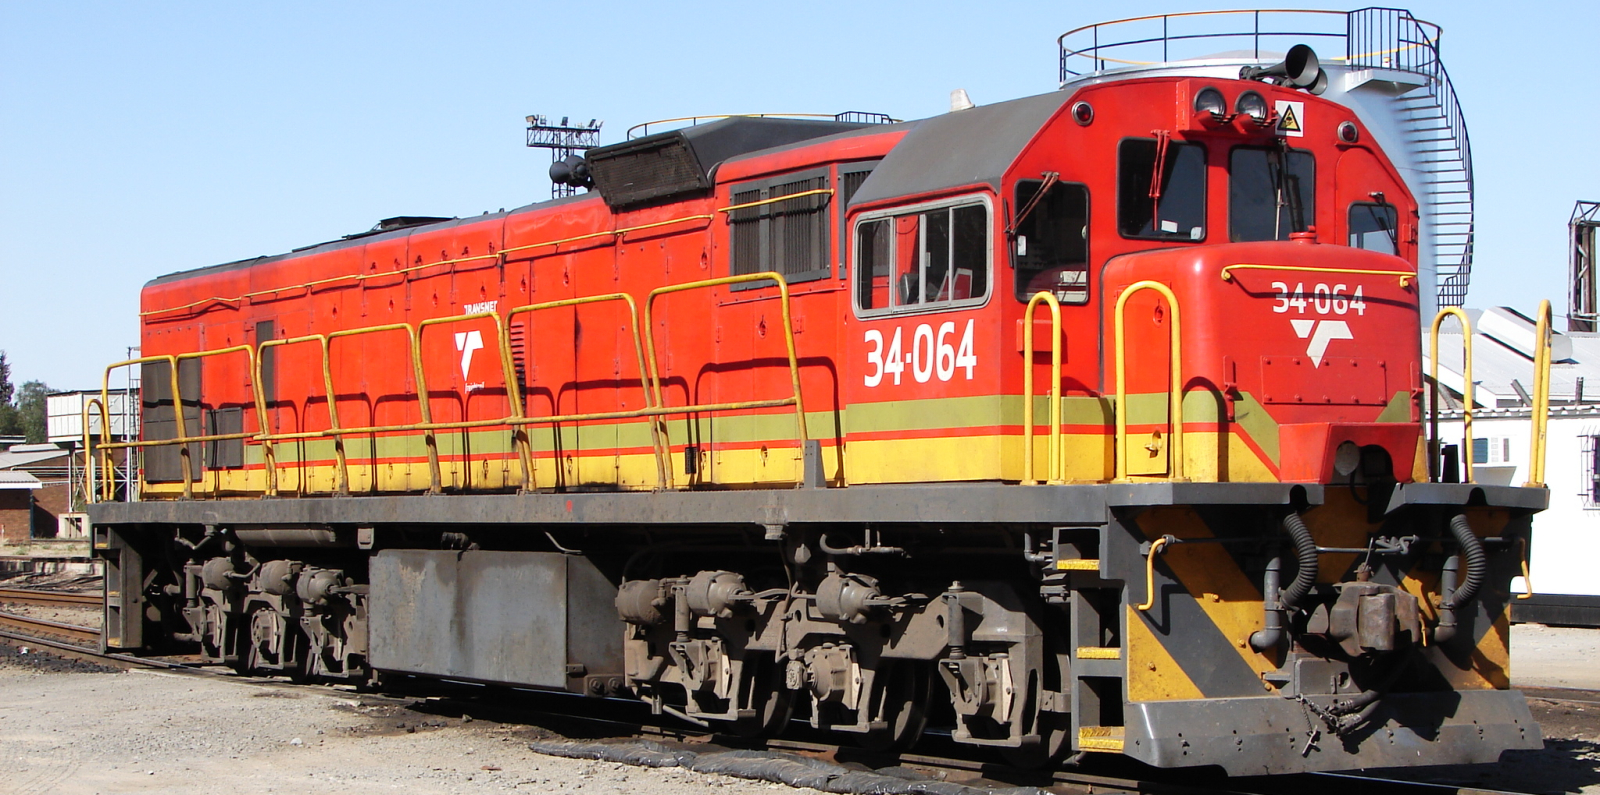 Transnet 34-064 in September 2015 in Bloemfontein